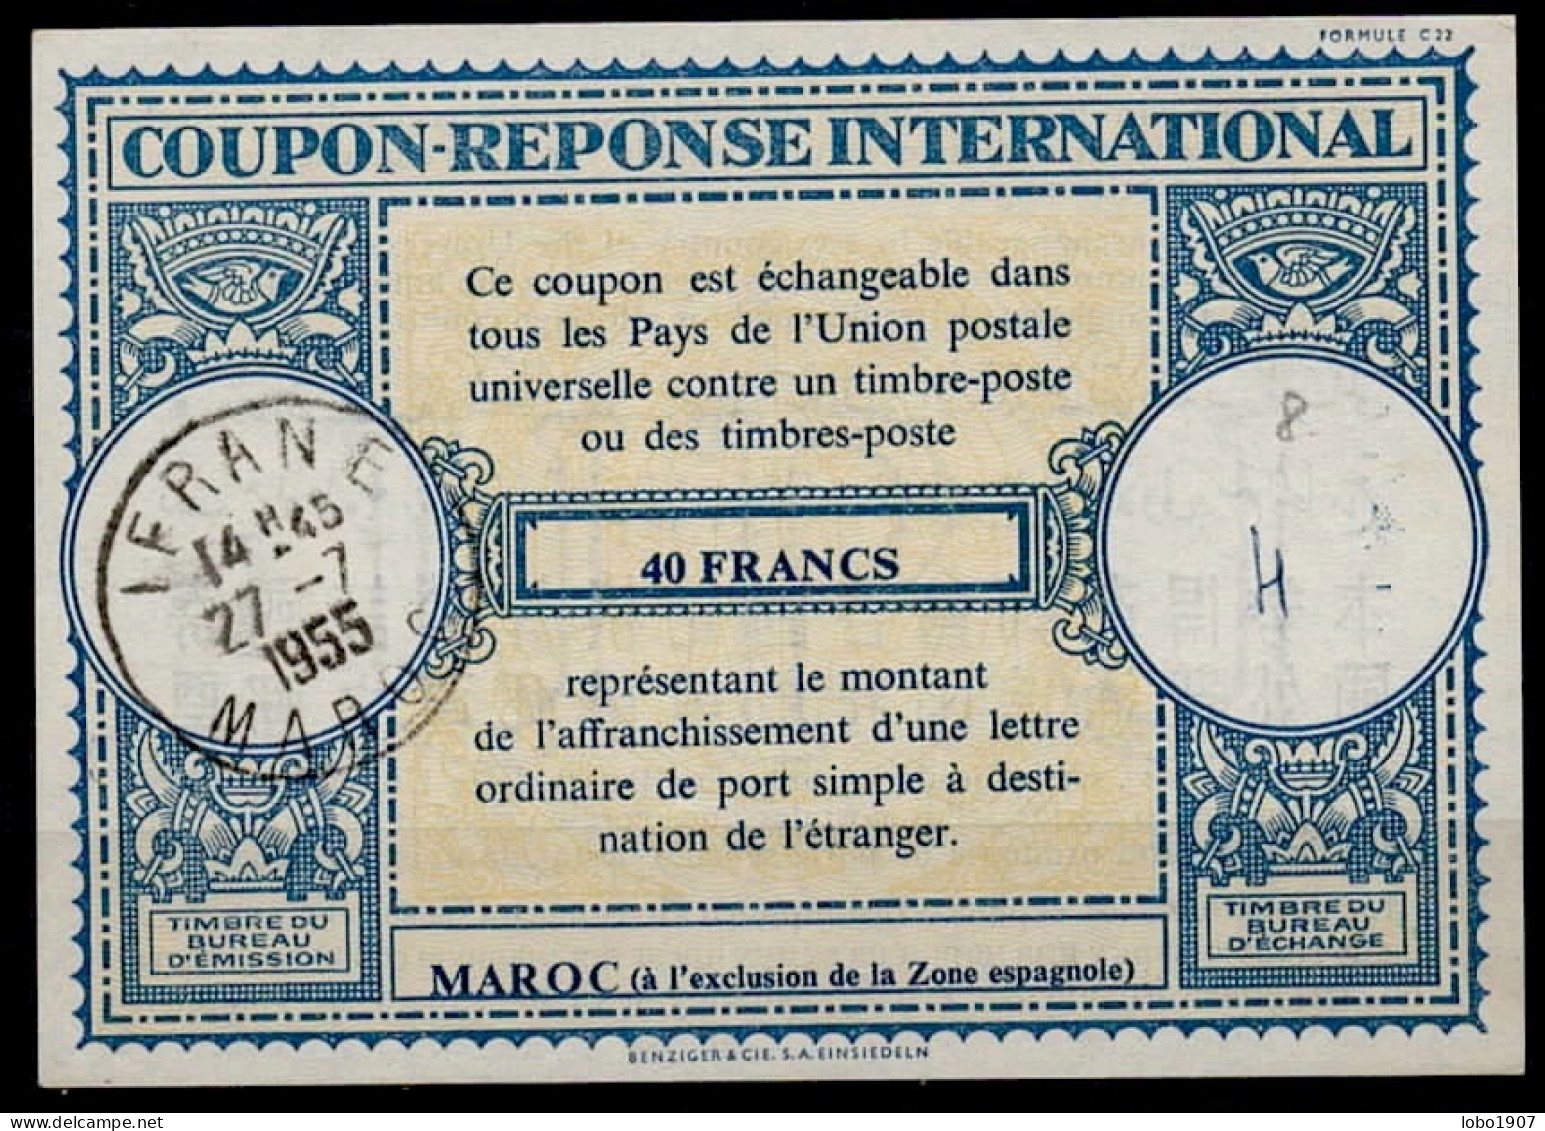 MAROC MOROCCO MARRUECOS  Lo16u  40 FRANCS  International Reply Coupon Reponse Antwortschein IRC IAS  IERANE 27.07.55 - Marokko (1956-...)